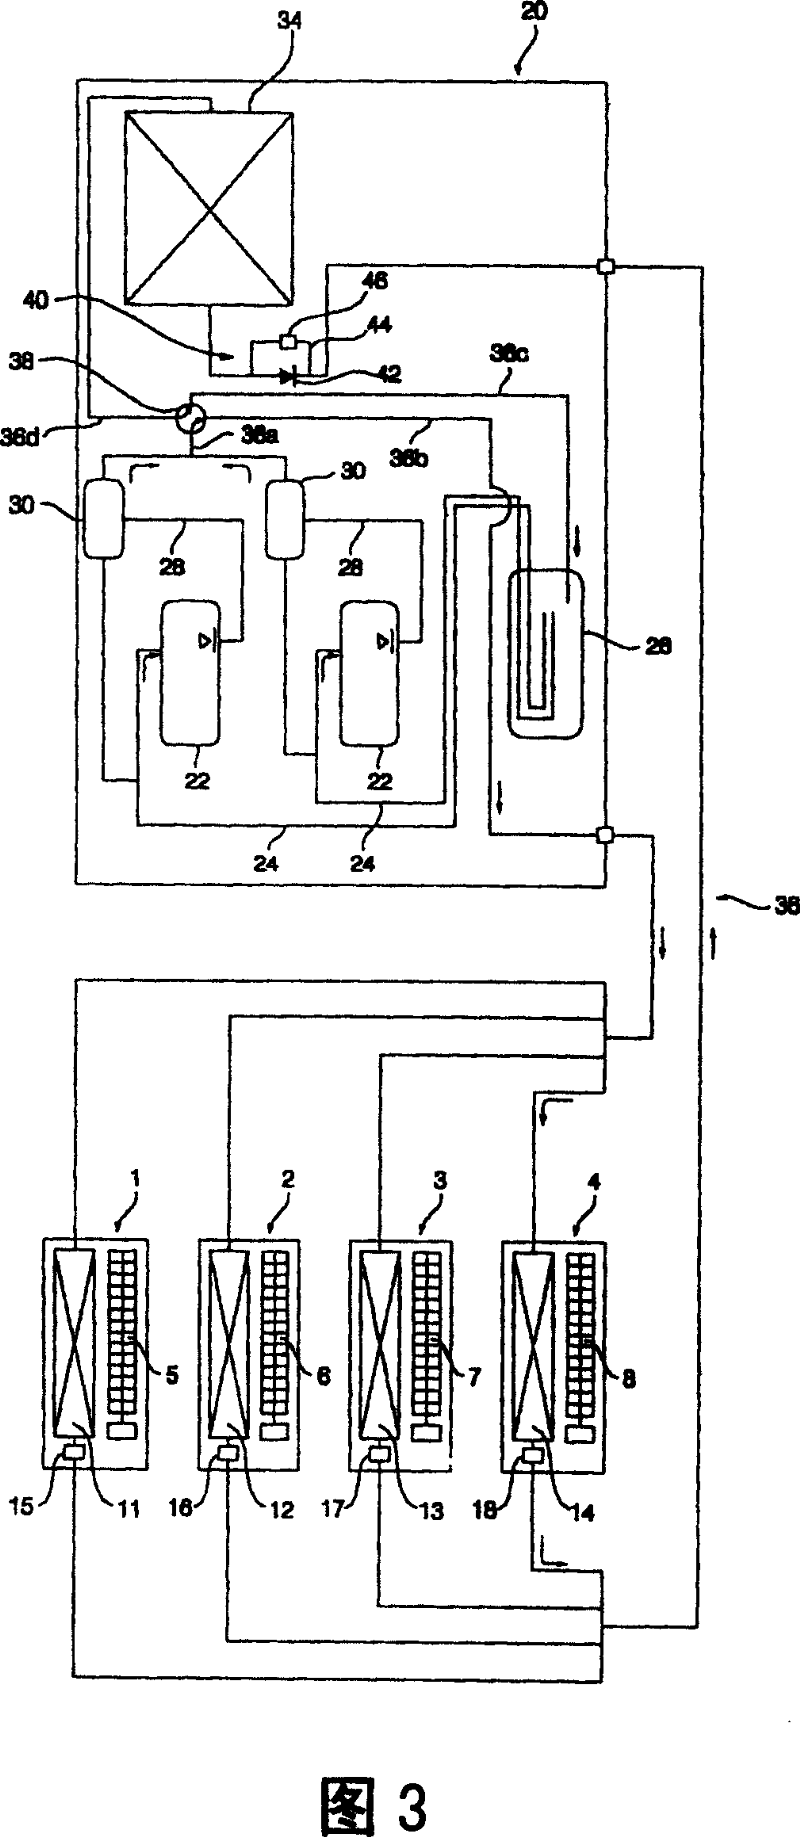 Control method of complex heat pump